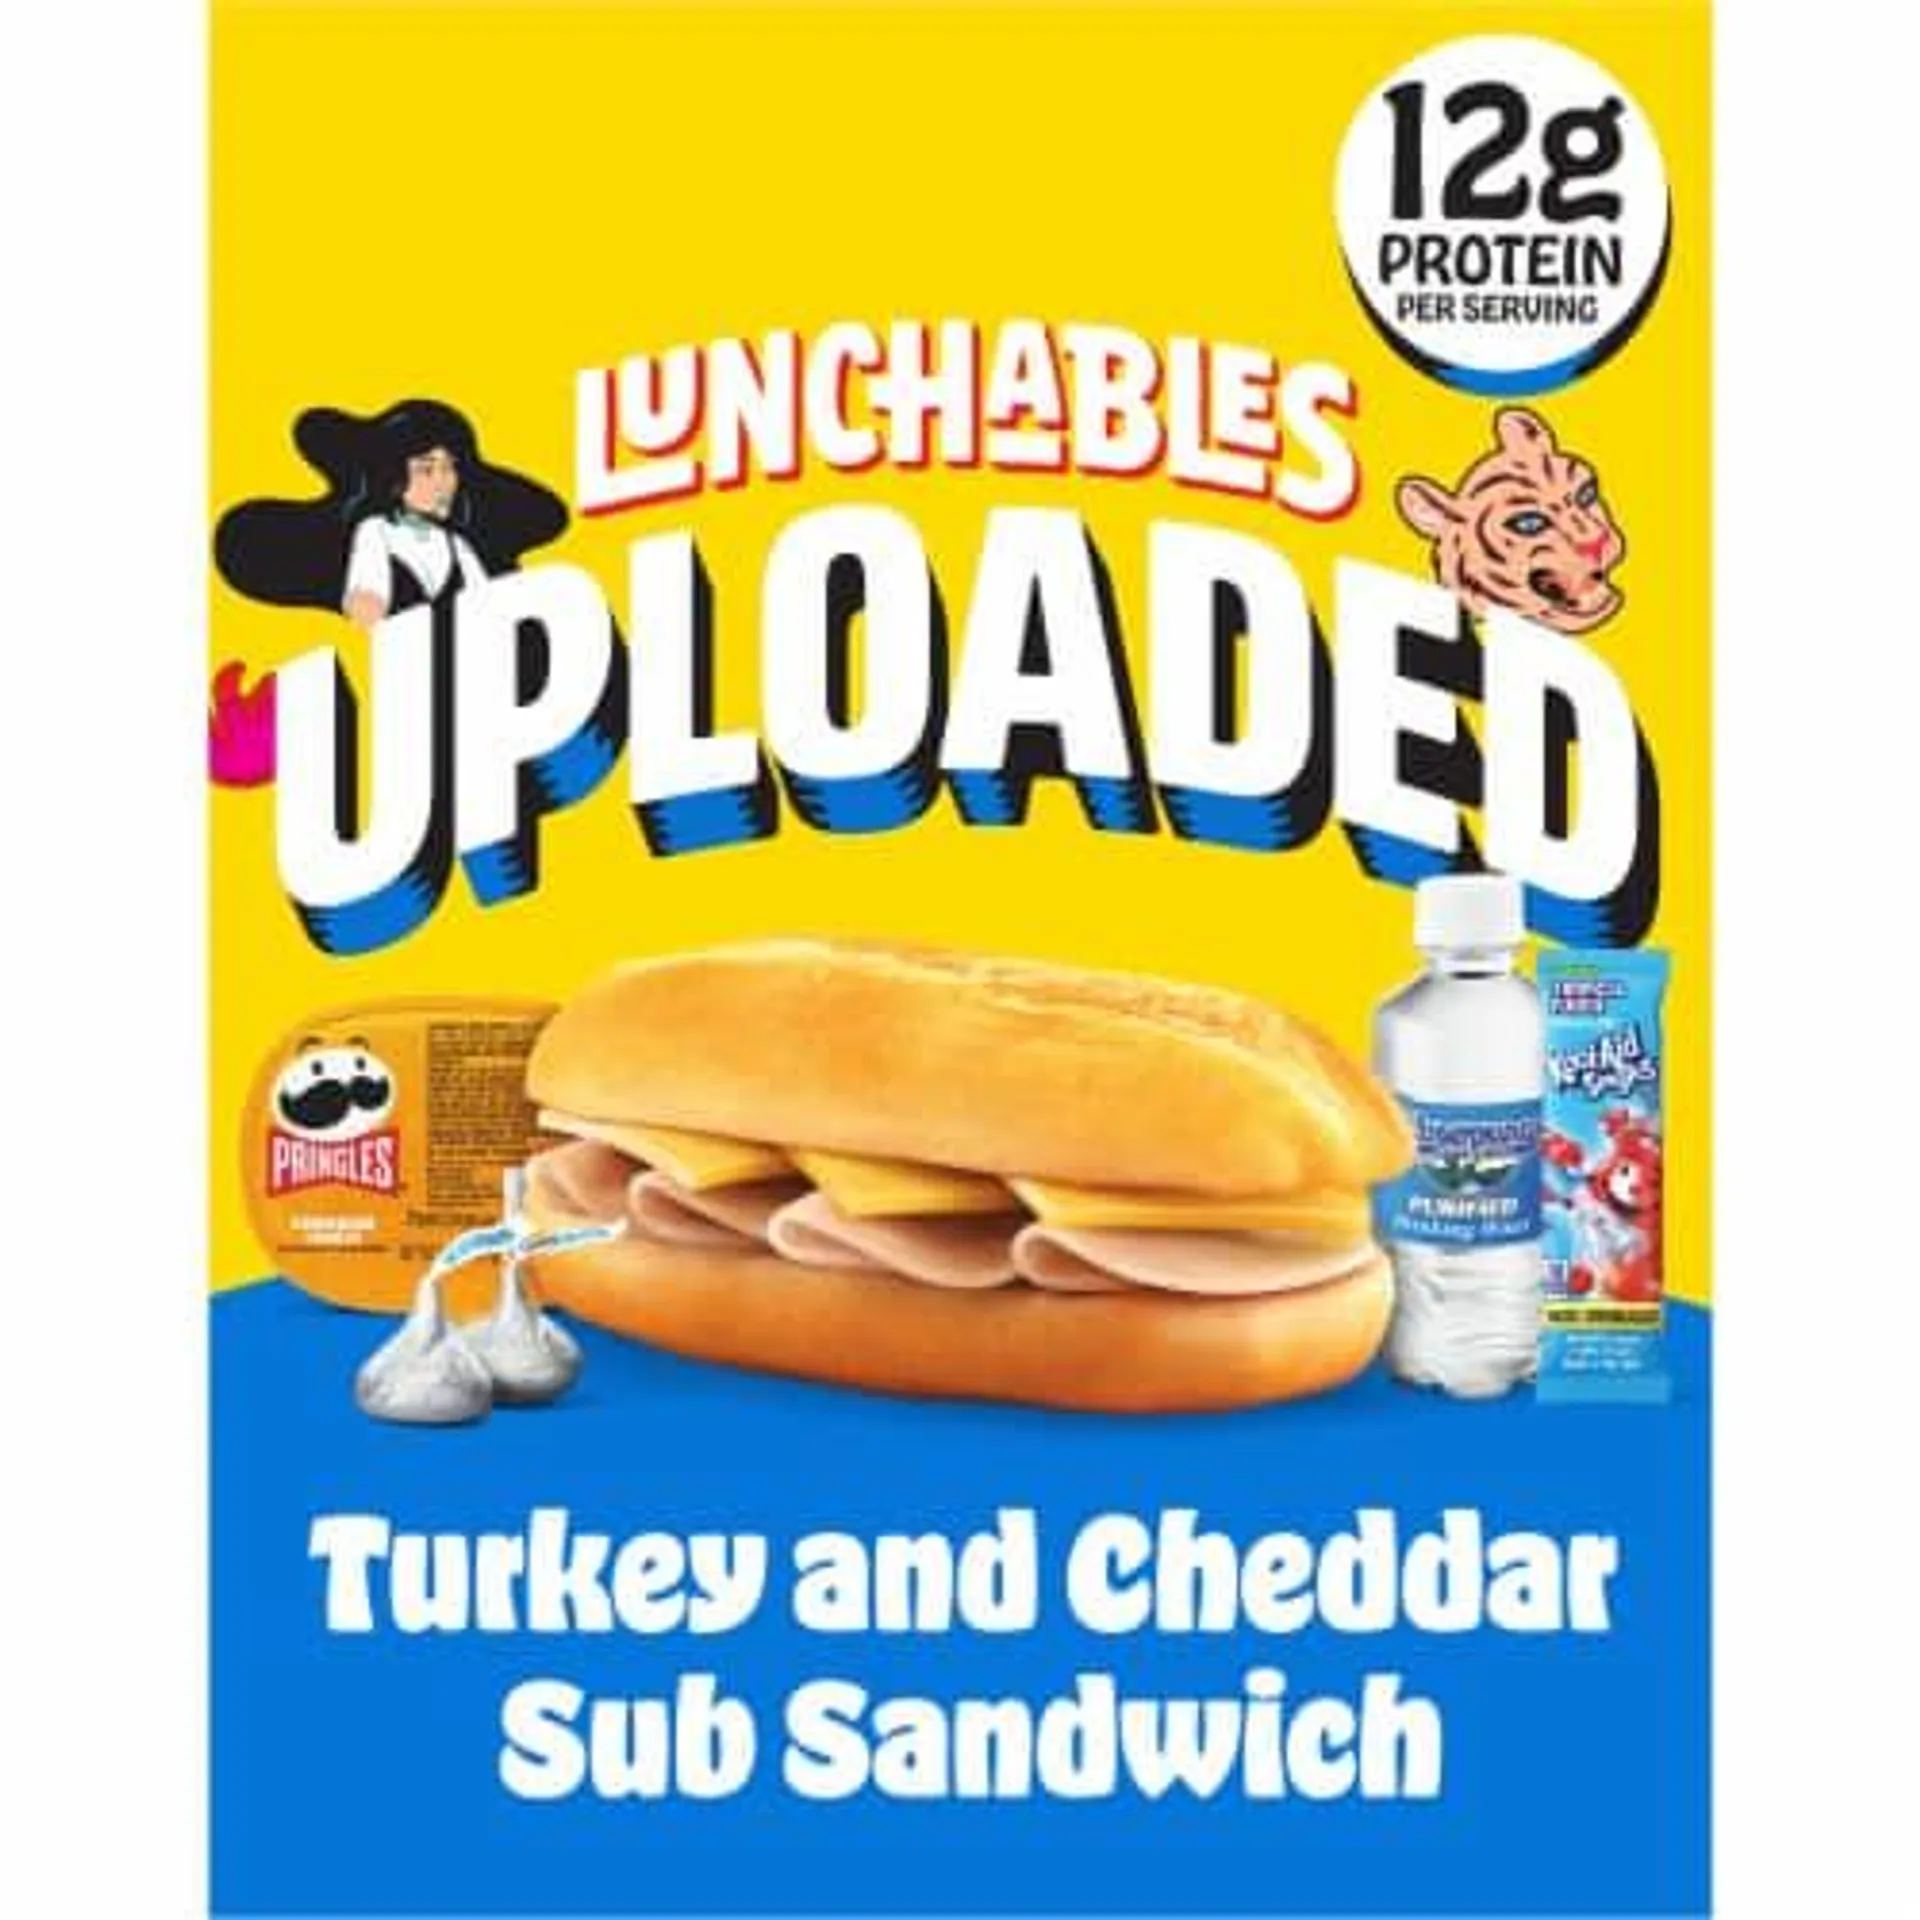 Lunchables Uploaded Turkey & Cheddar Sub Sandwich Kids Lunch Meal Kit